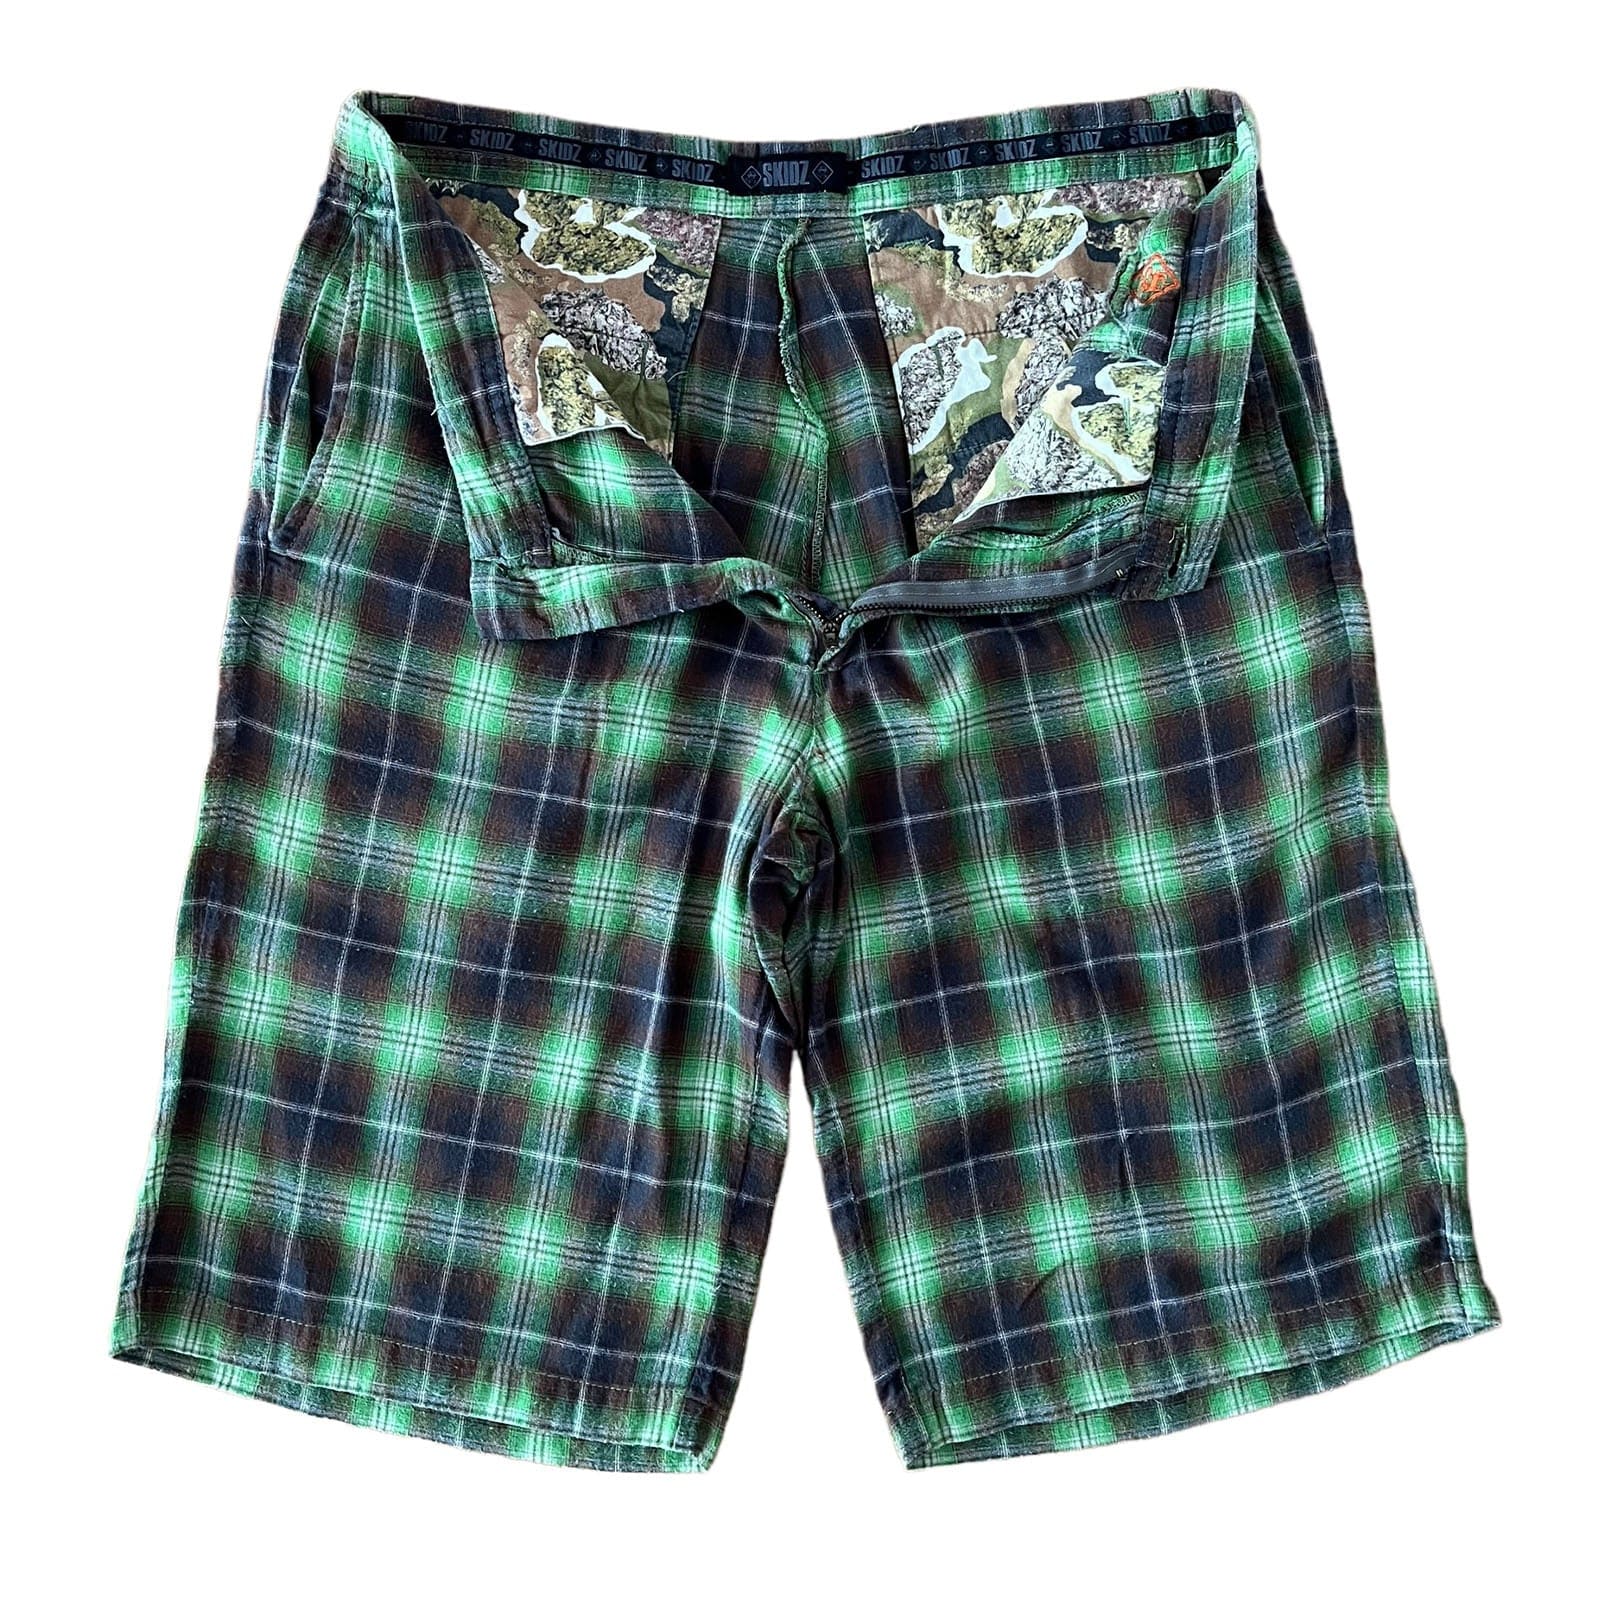 SKIDZ Shorts Vintage Plaid Flannel Cargo Shorts - Brown (Copy)